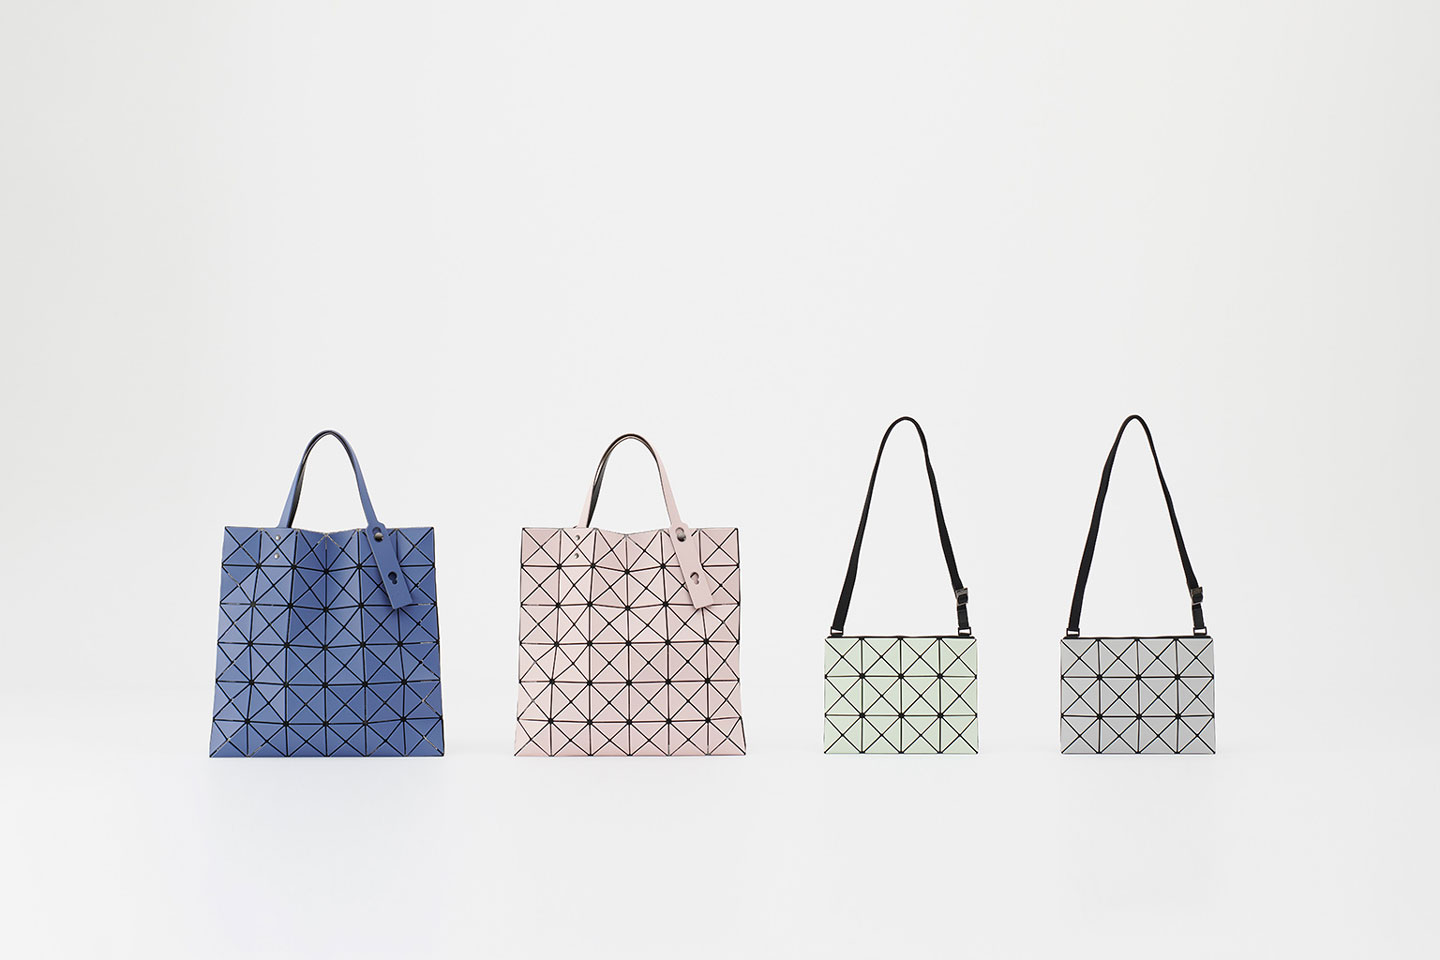 The distinctive Bao Bao bags by Issey Miyake